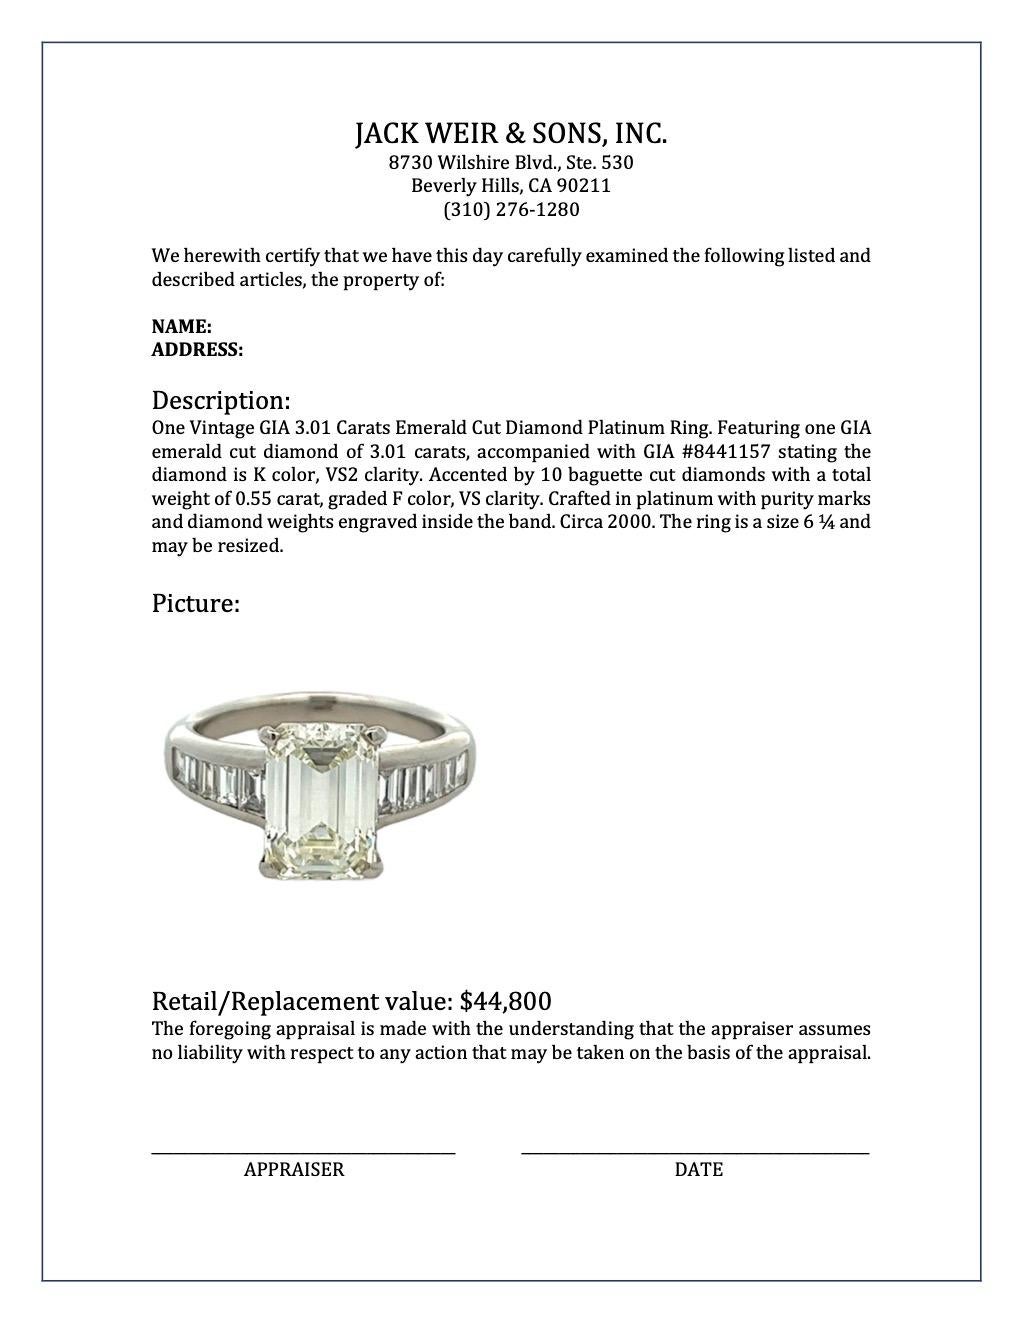 Vintage GIA 3.01 Carats Emerald Cut Diamond Platinum Ring 4